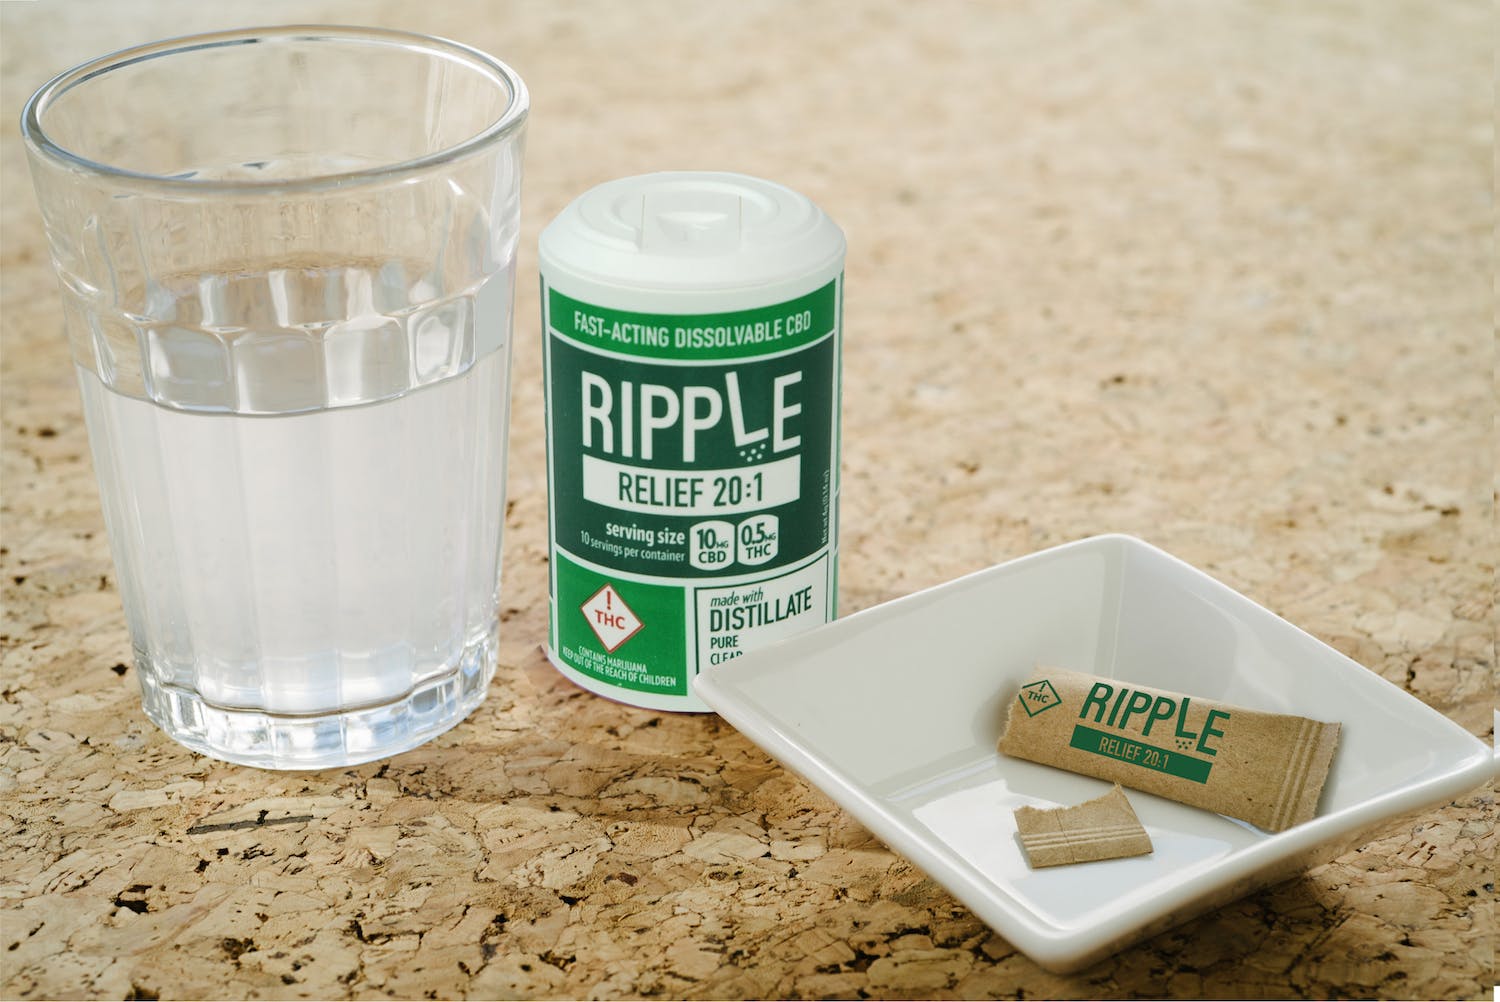 edible-stillwater-brands-ripple-relief-201-100mg-cbd